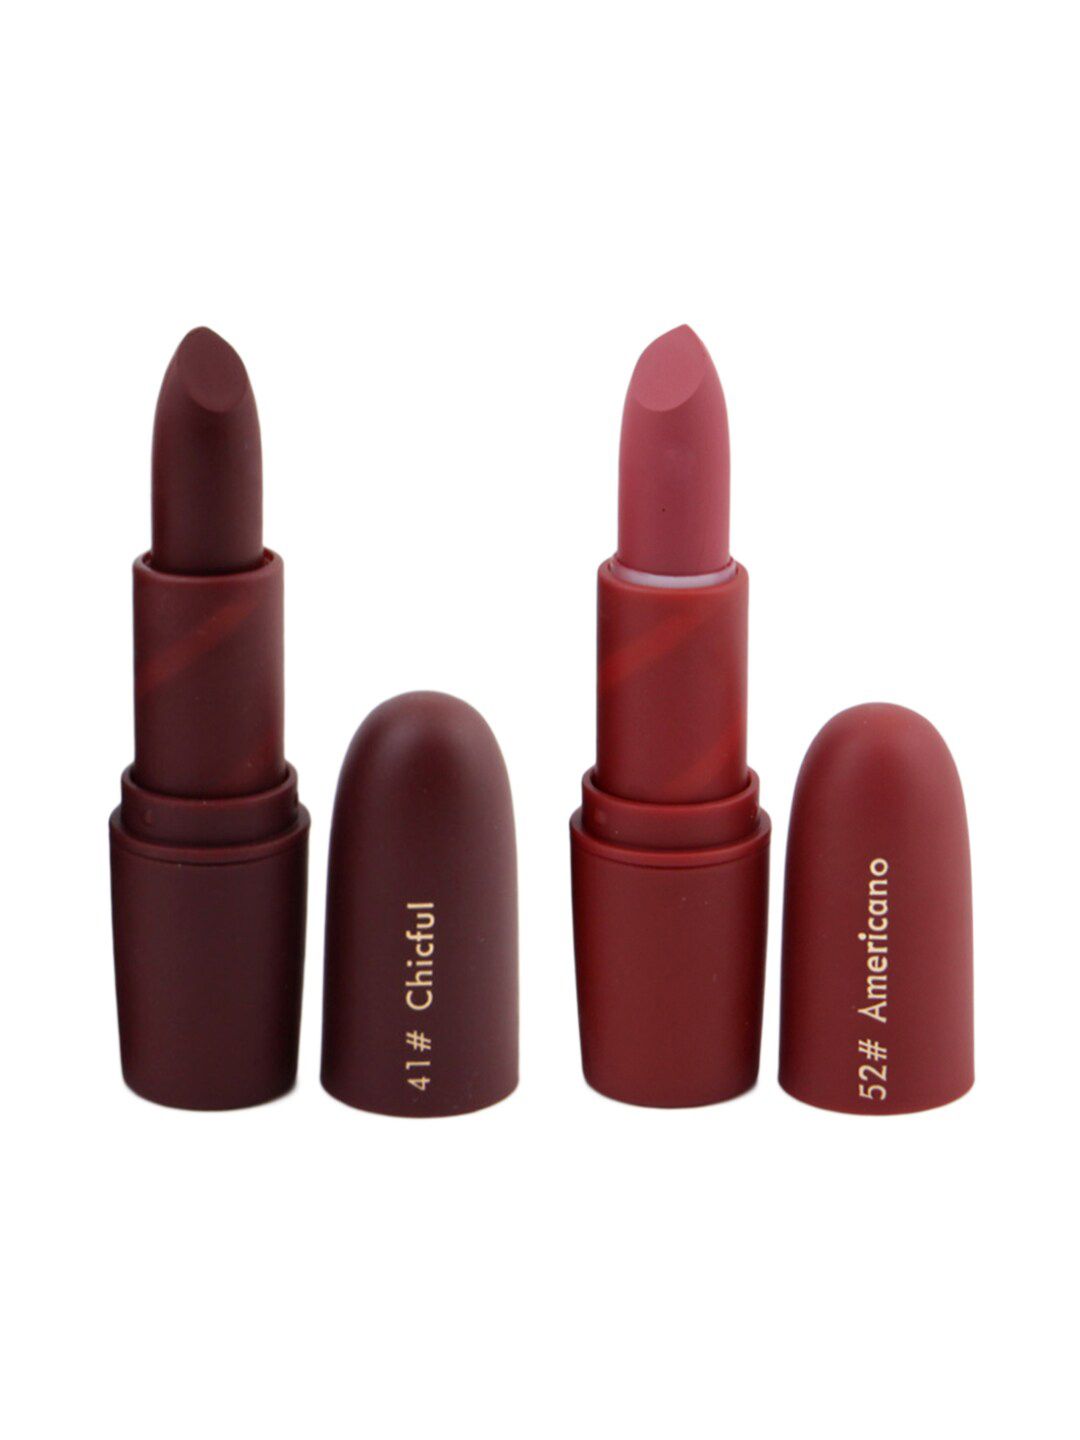 MISS ROSE Professional Make-Up Set of 2 Matte Creamy Lipsticks - Chicful 41 & Americano 52 Price in India